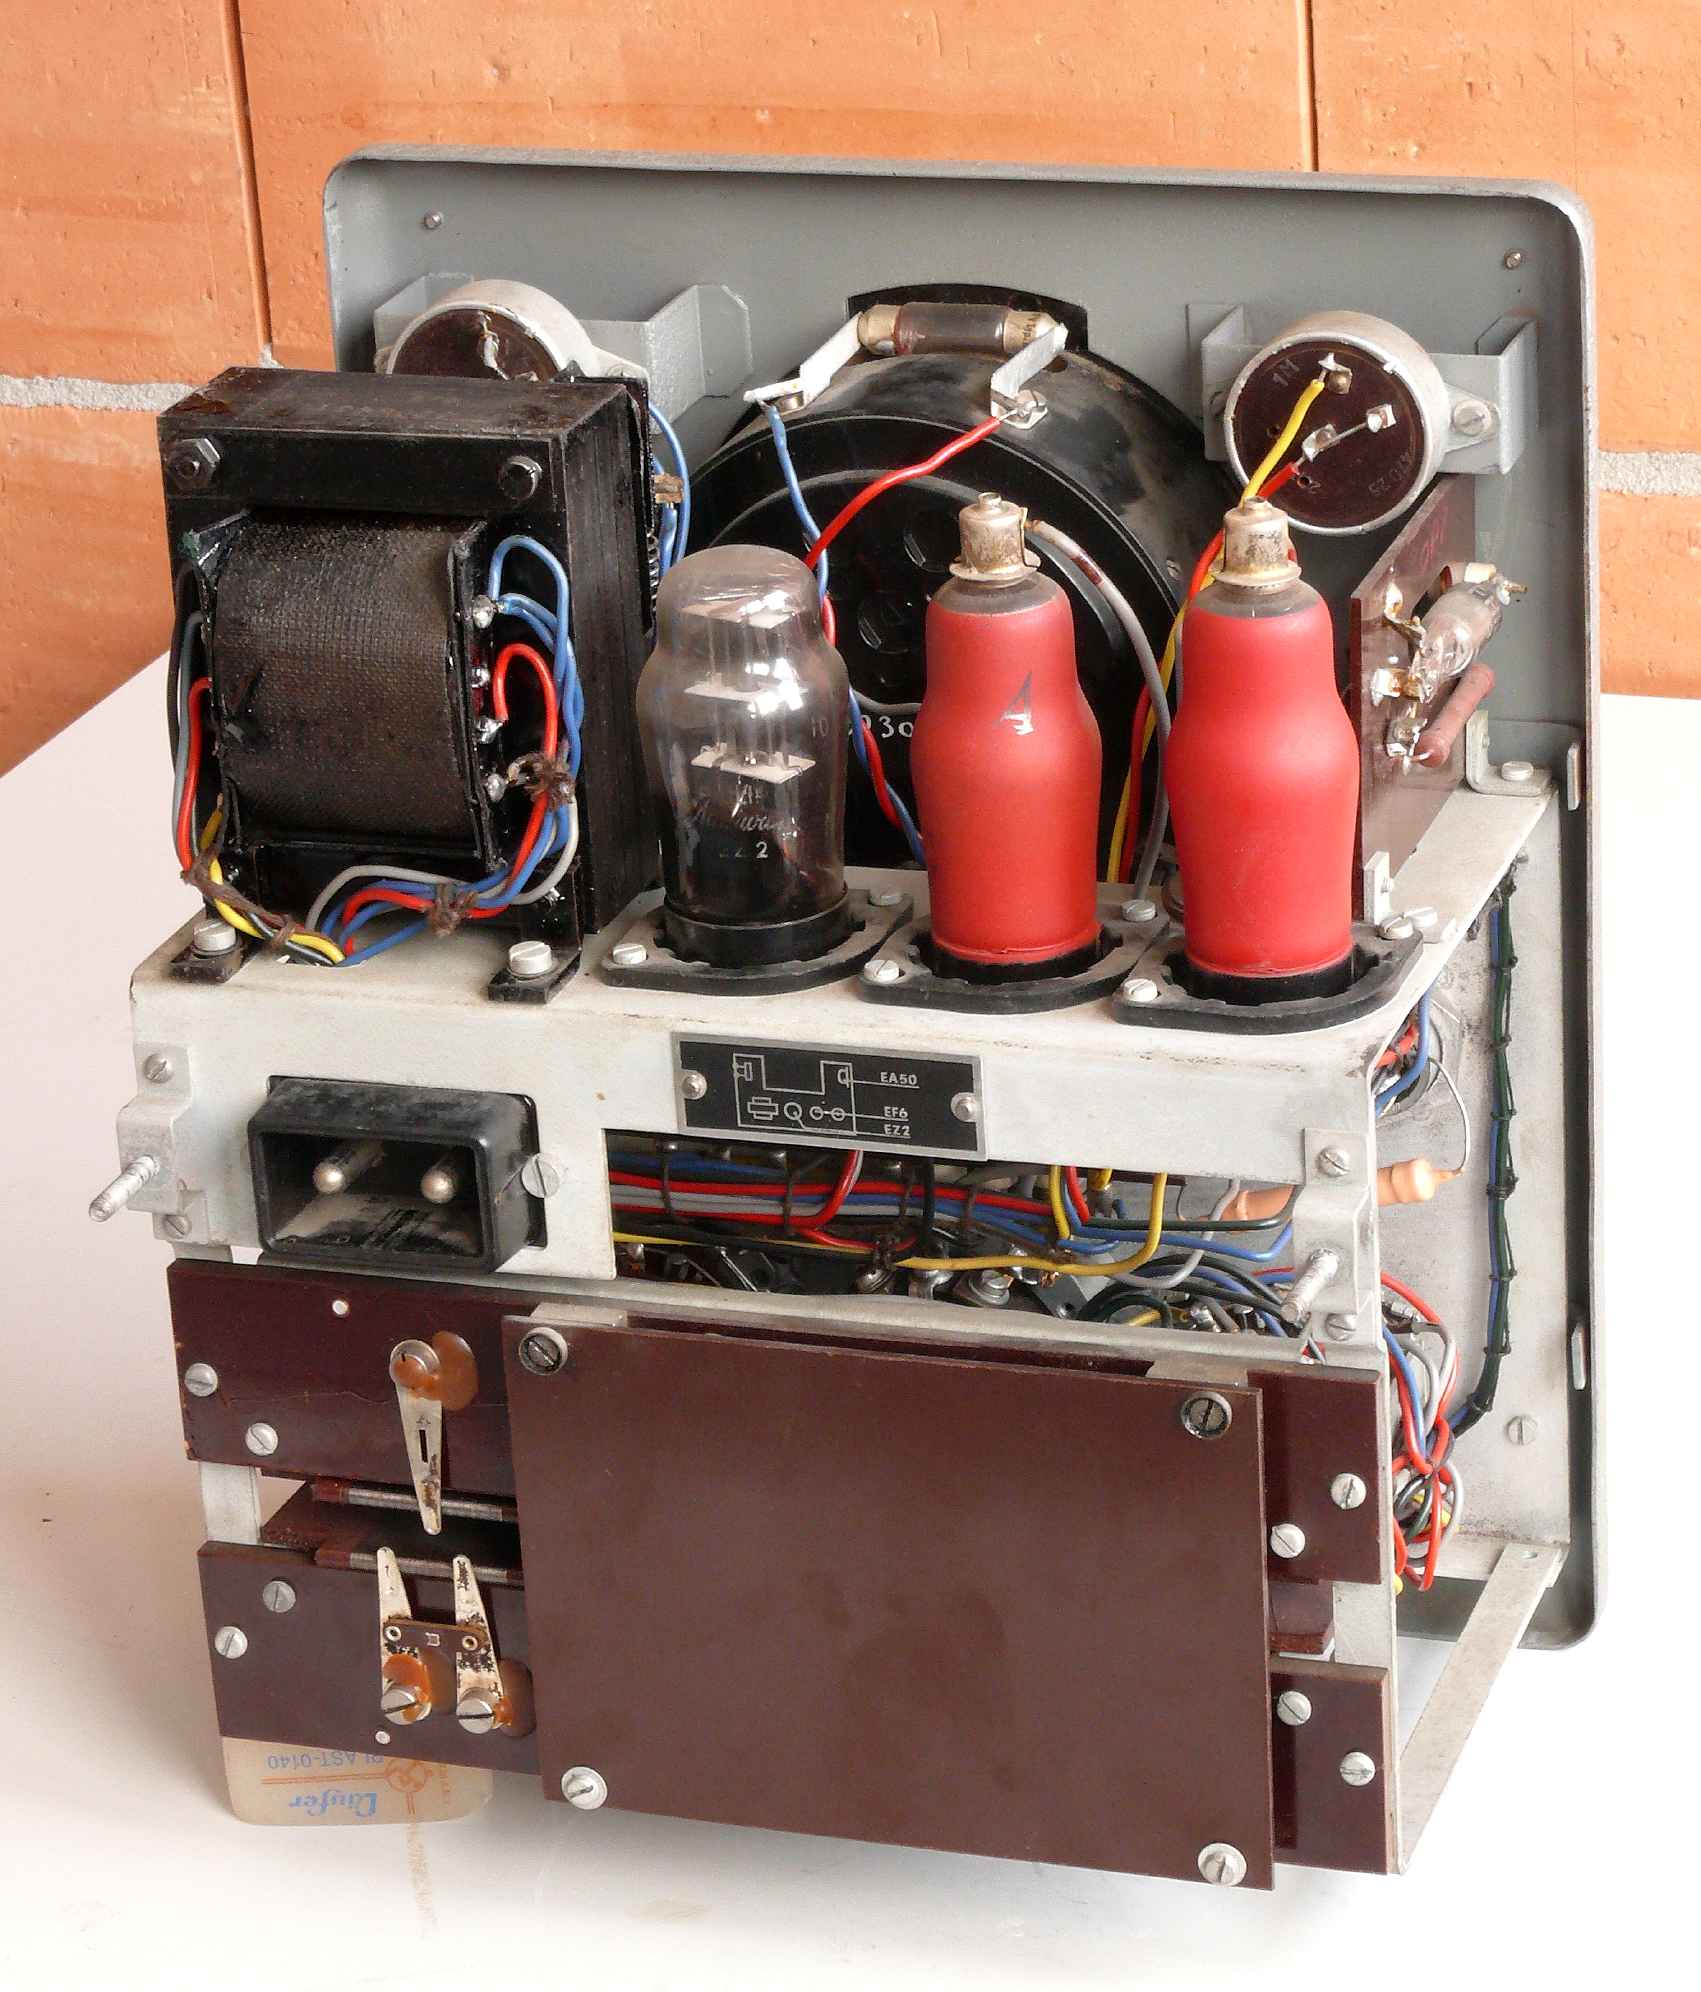 Voltmètre à diode
(Philips GM 6004)